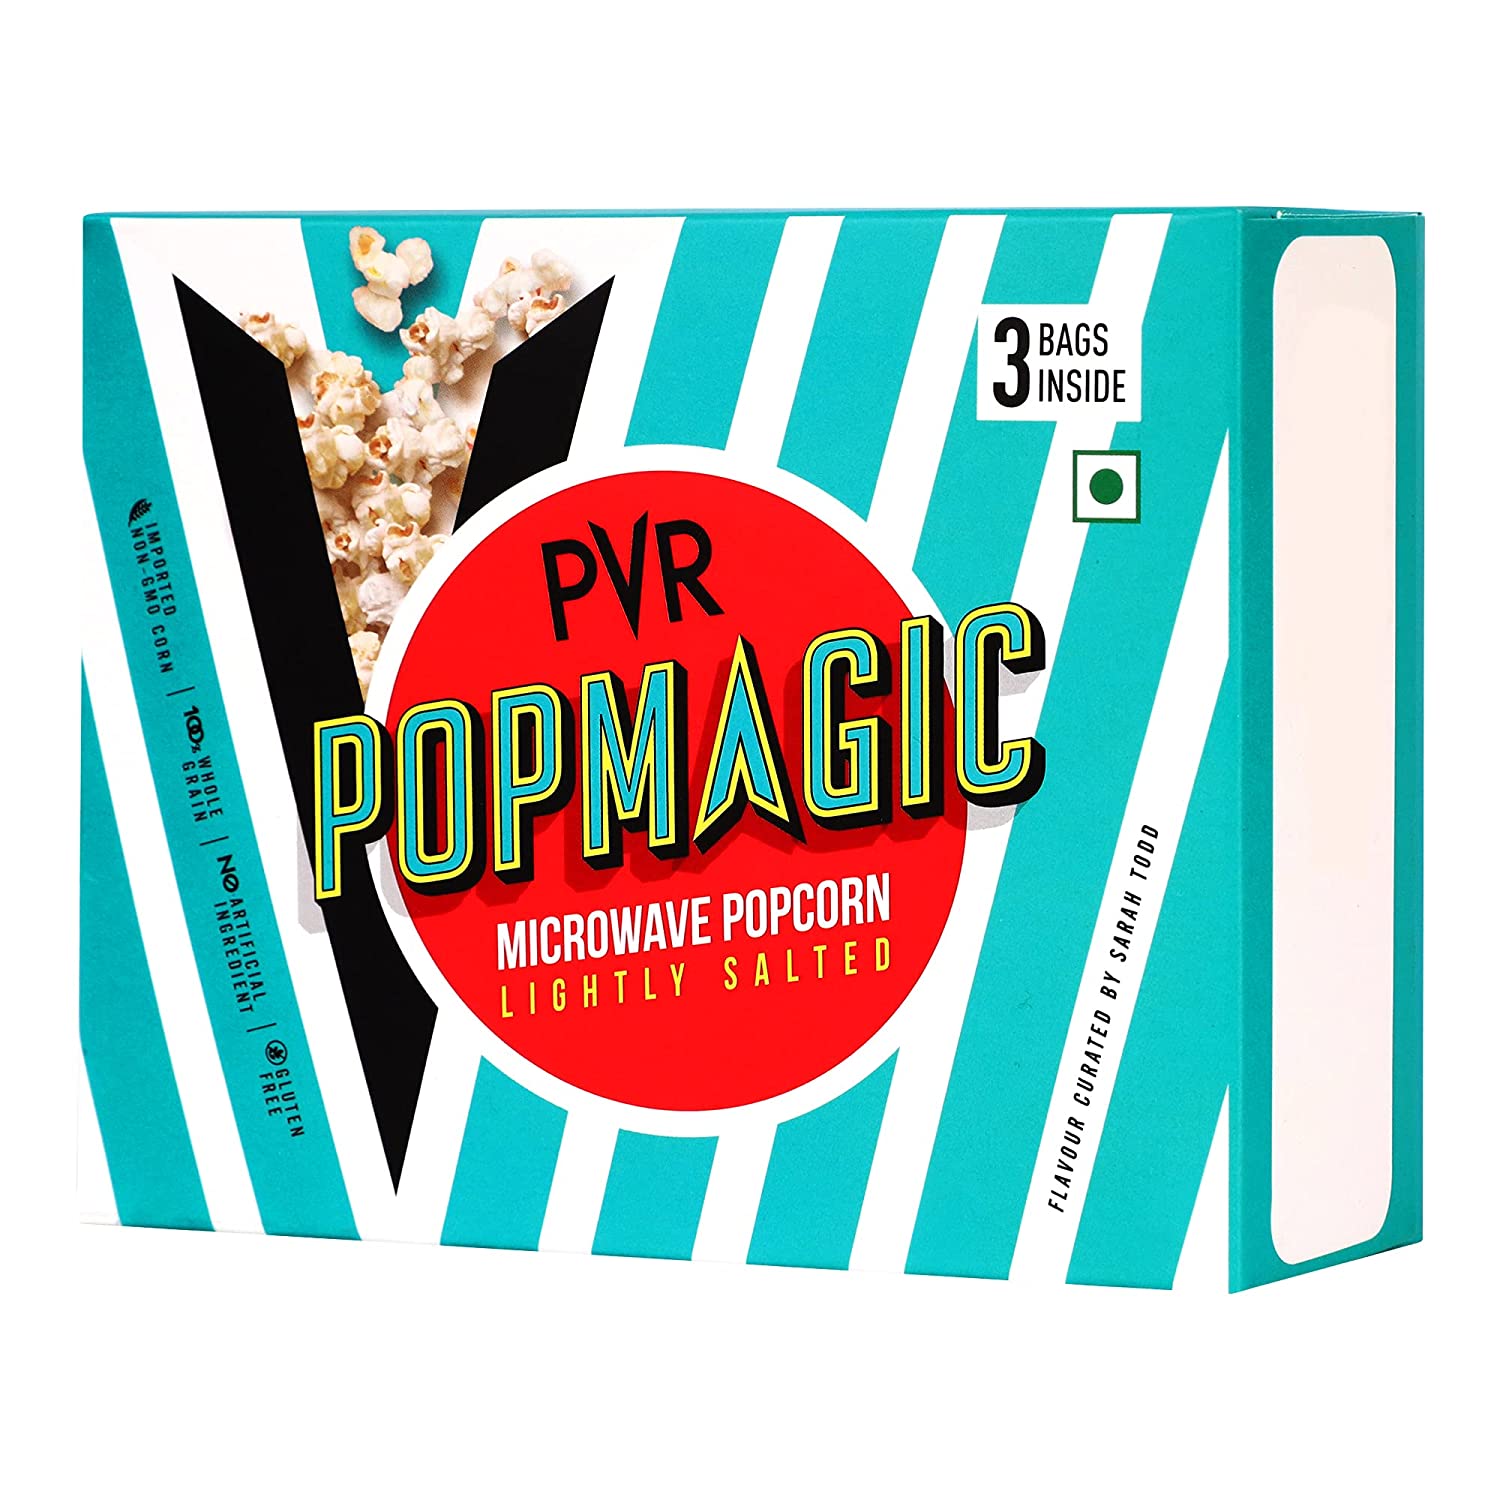 PVR PopMagic Microwave Popcorn Lightly Salted Image